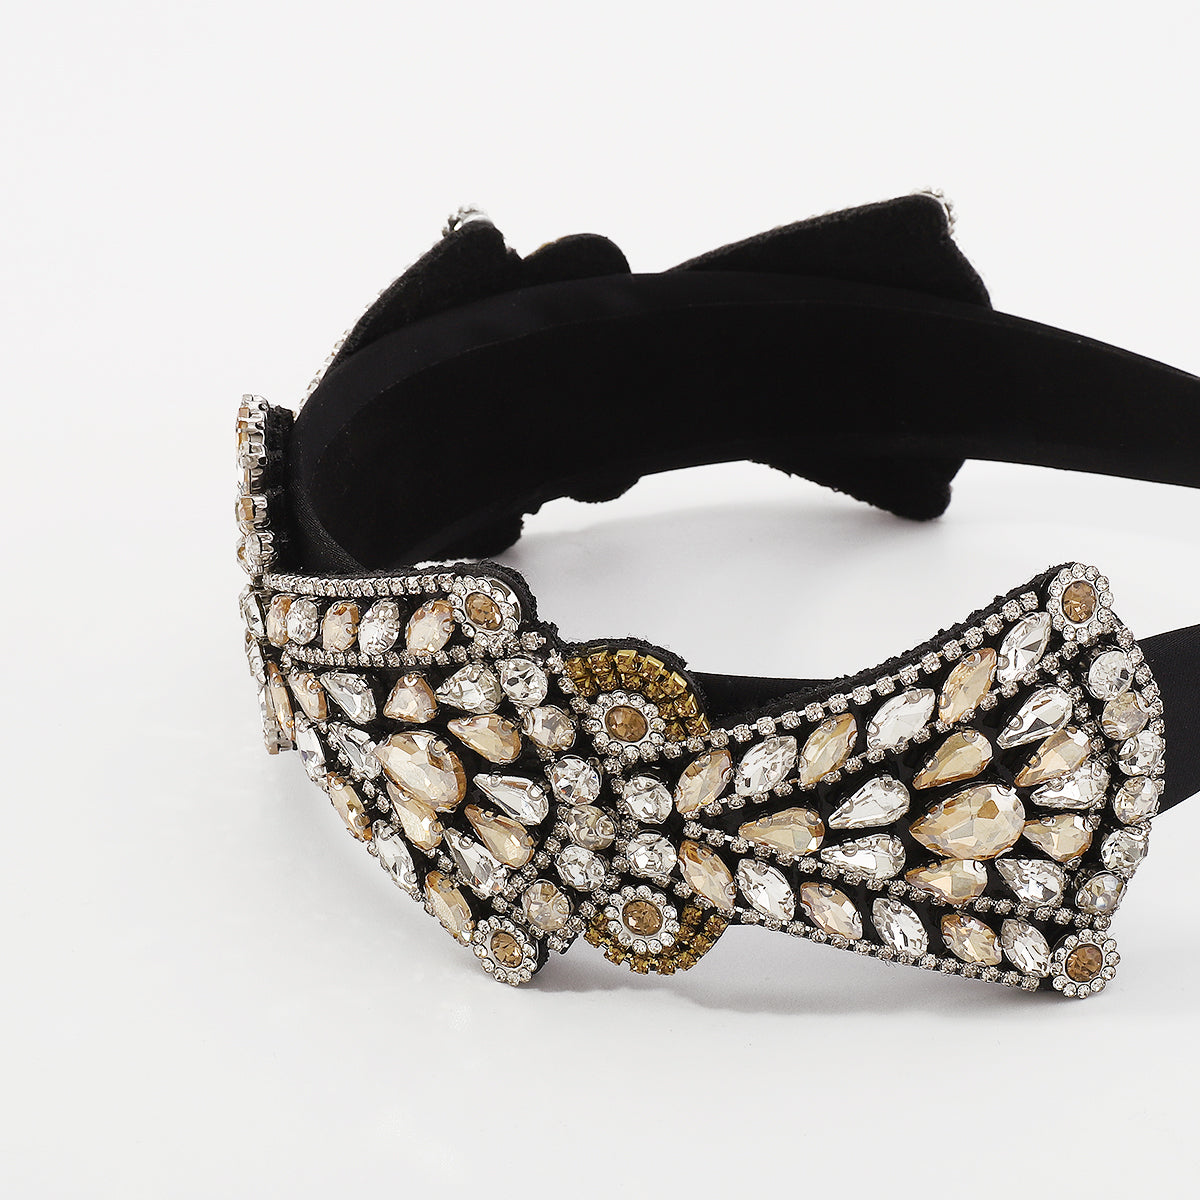 Exquisite Rhinestone Bow Headband medyjewelry